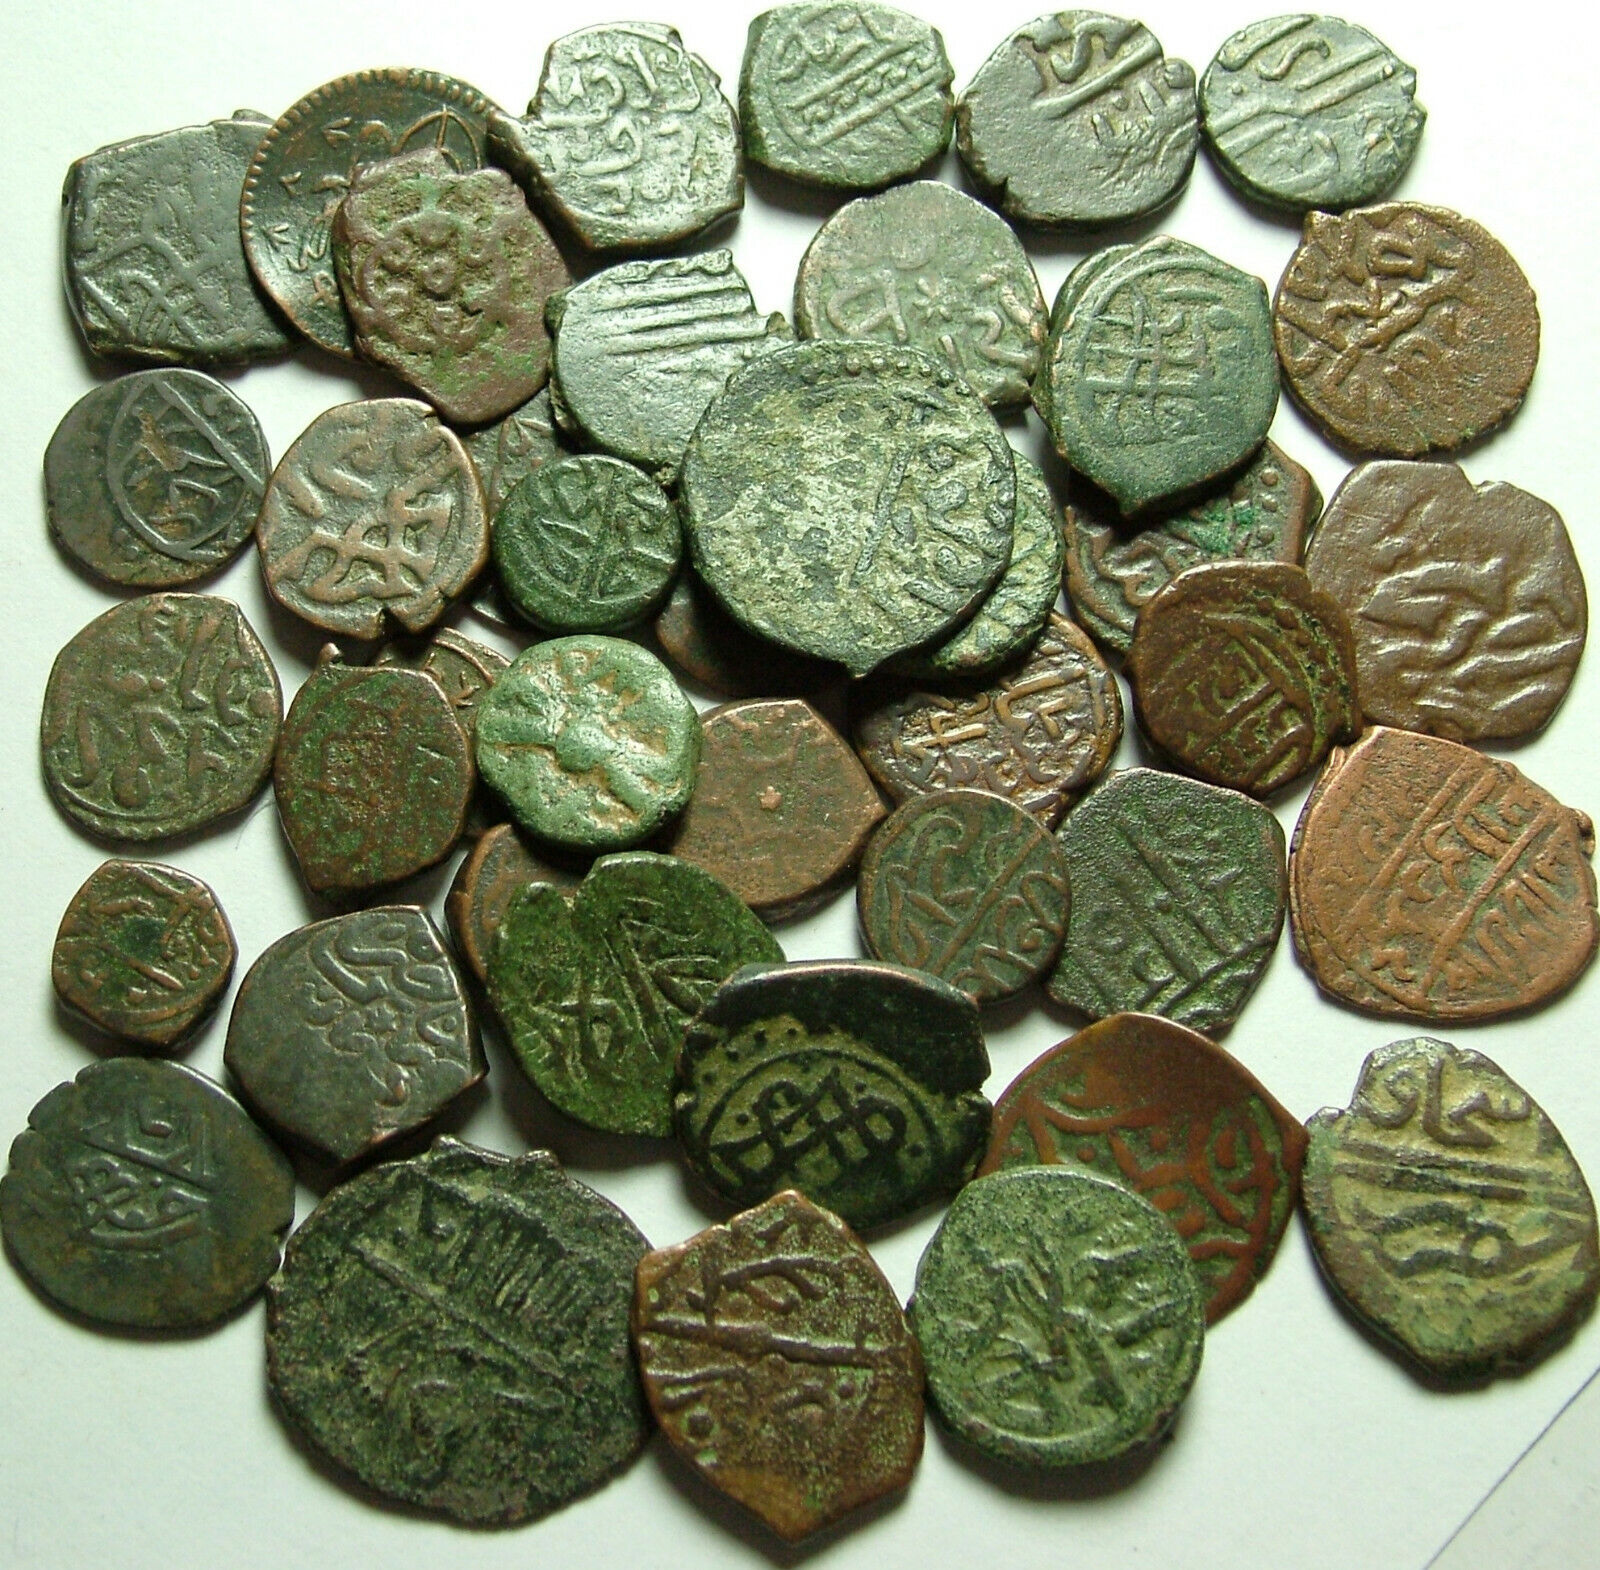 Lot 3 Rare original Islamic copper Bronze Mangir coins/Arabic/Ottoman Empire 15c Без бренда - фотография #2